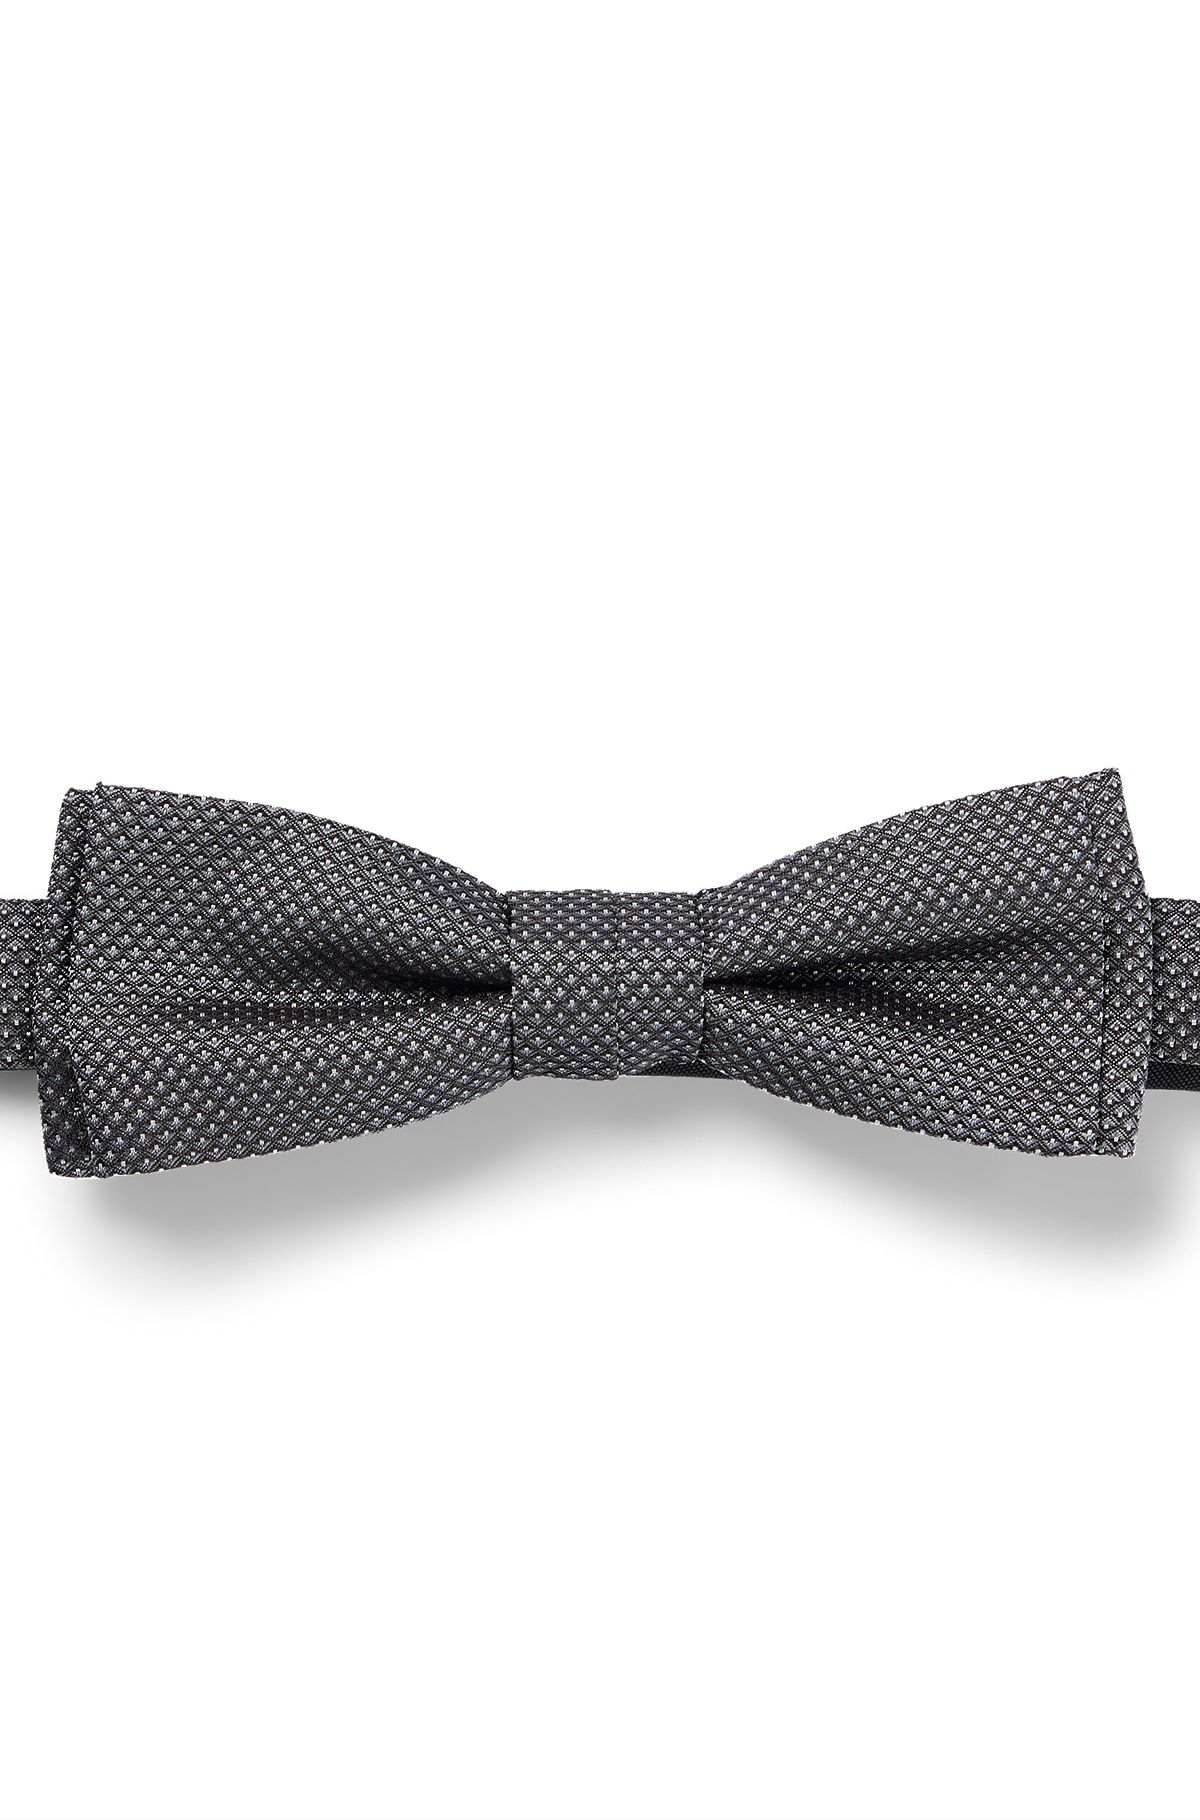 Italian-made bow tie in micro-pattern silk jacquard, Silver